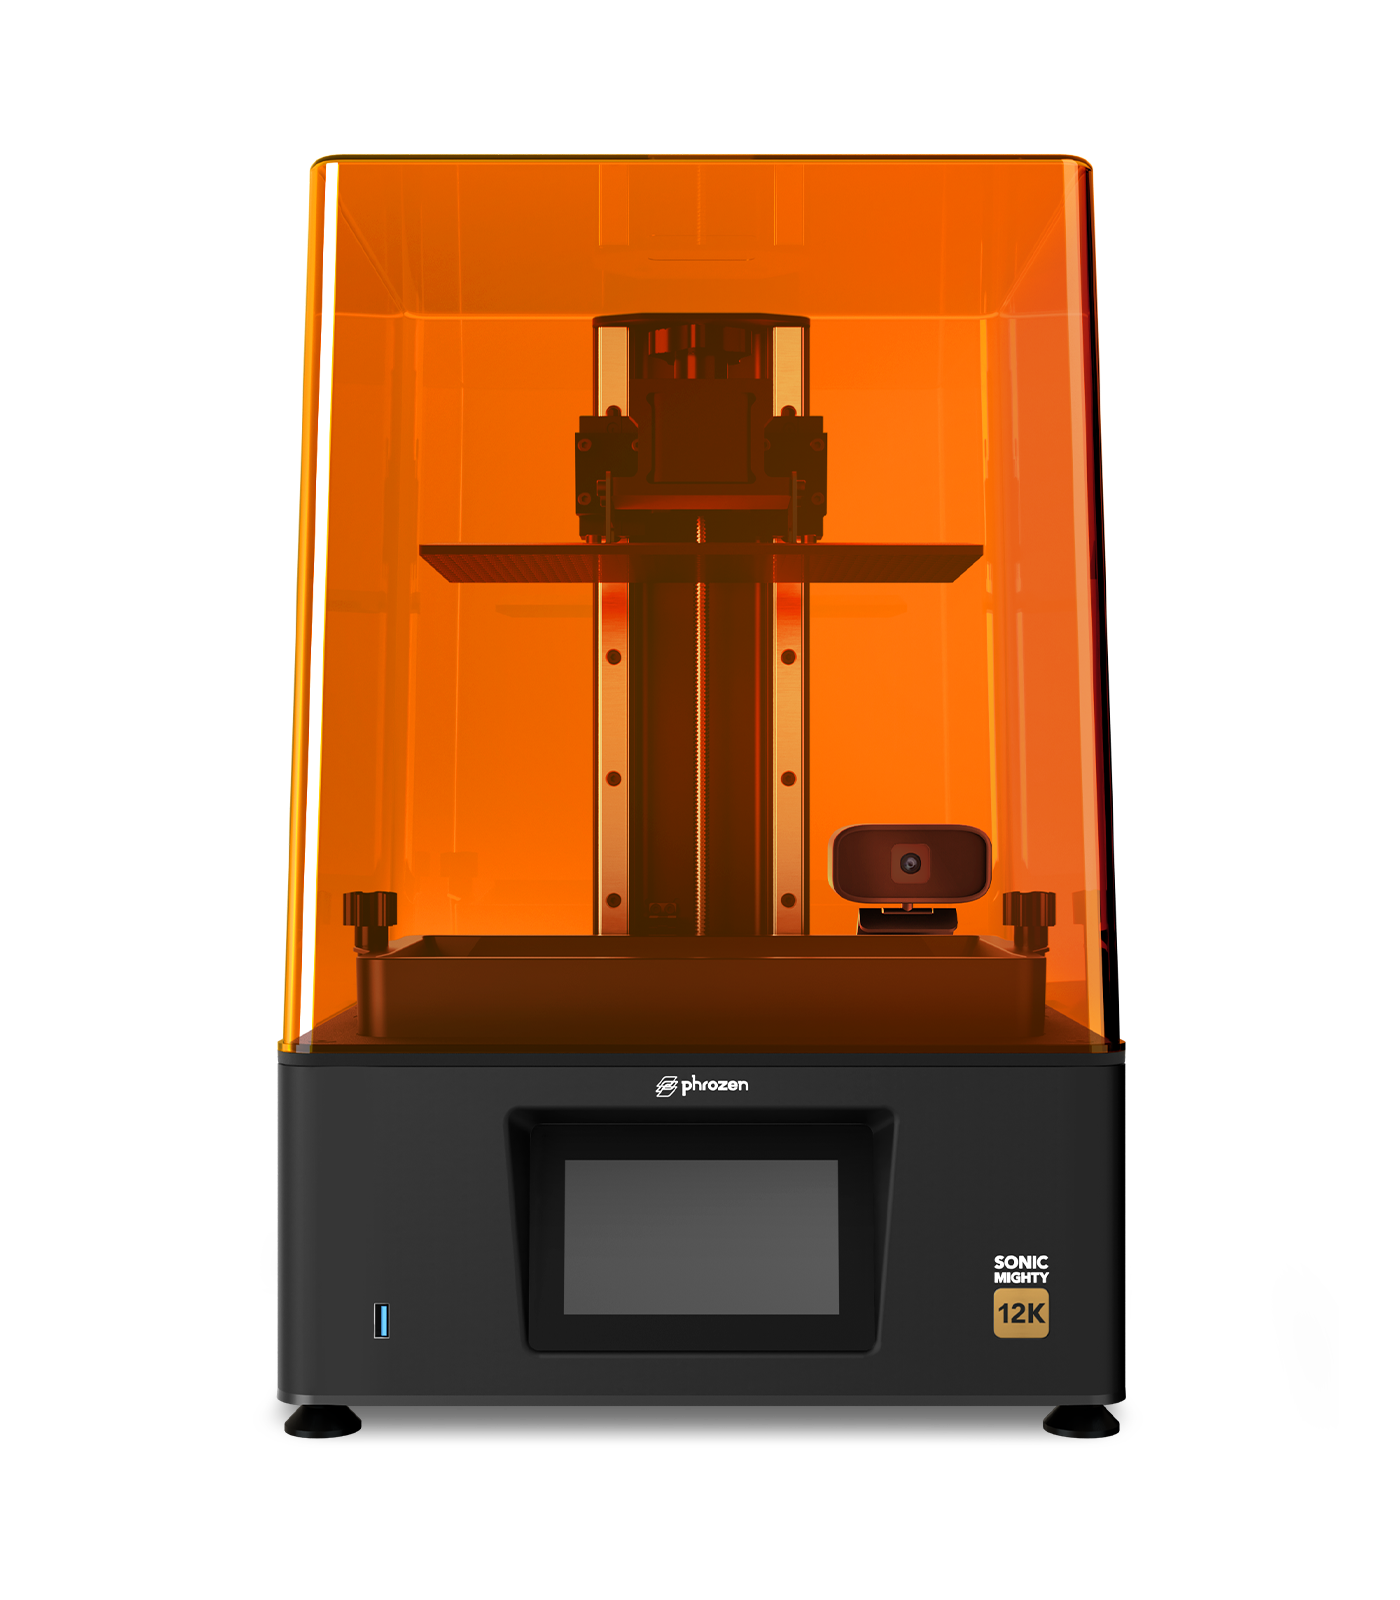 Phrozen Sonic Mighty 12K Resin 3D Printer